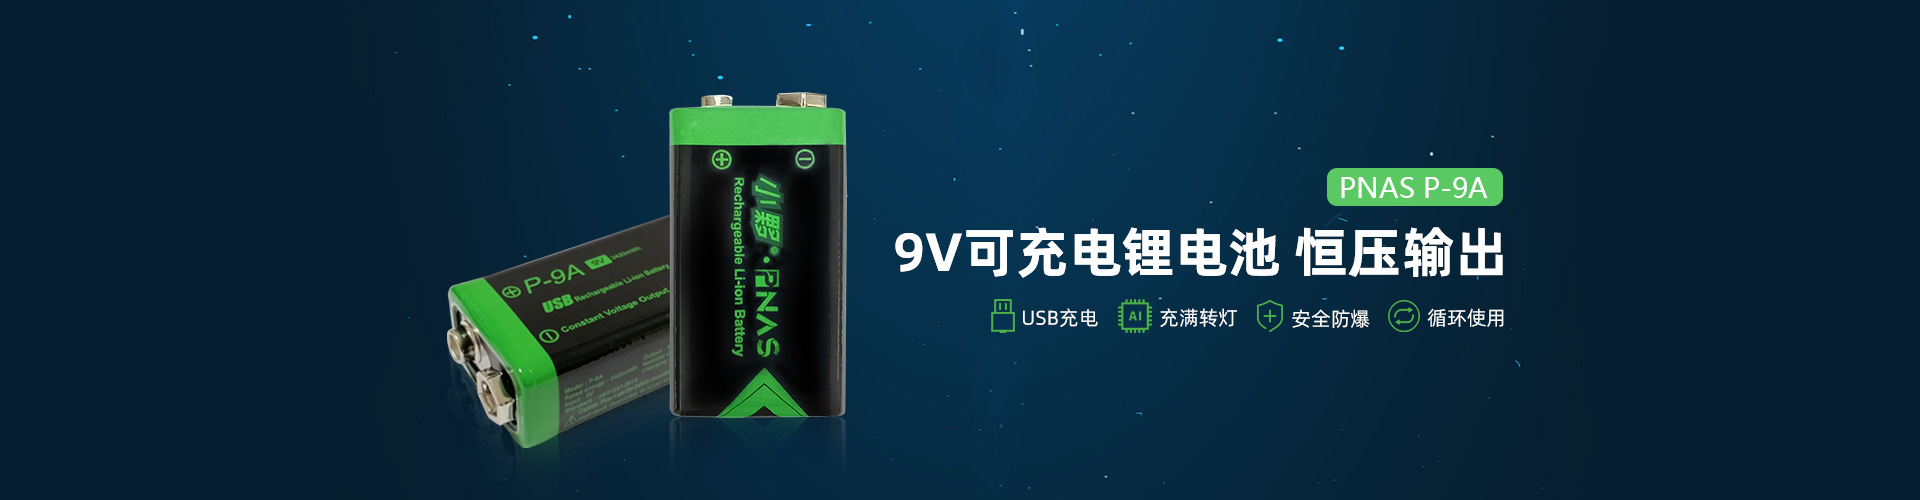 9V可充電鋰電池